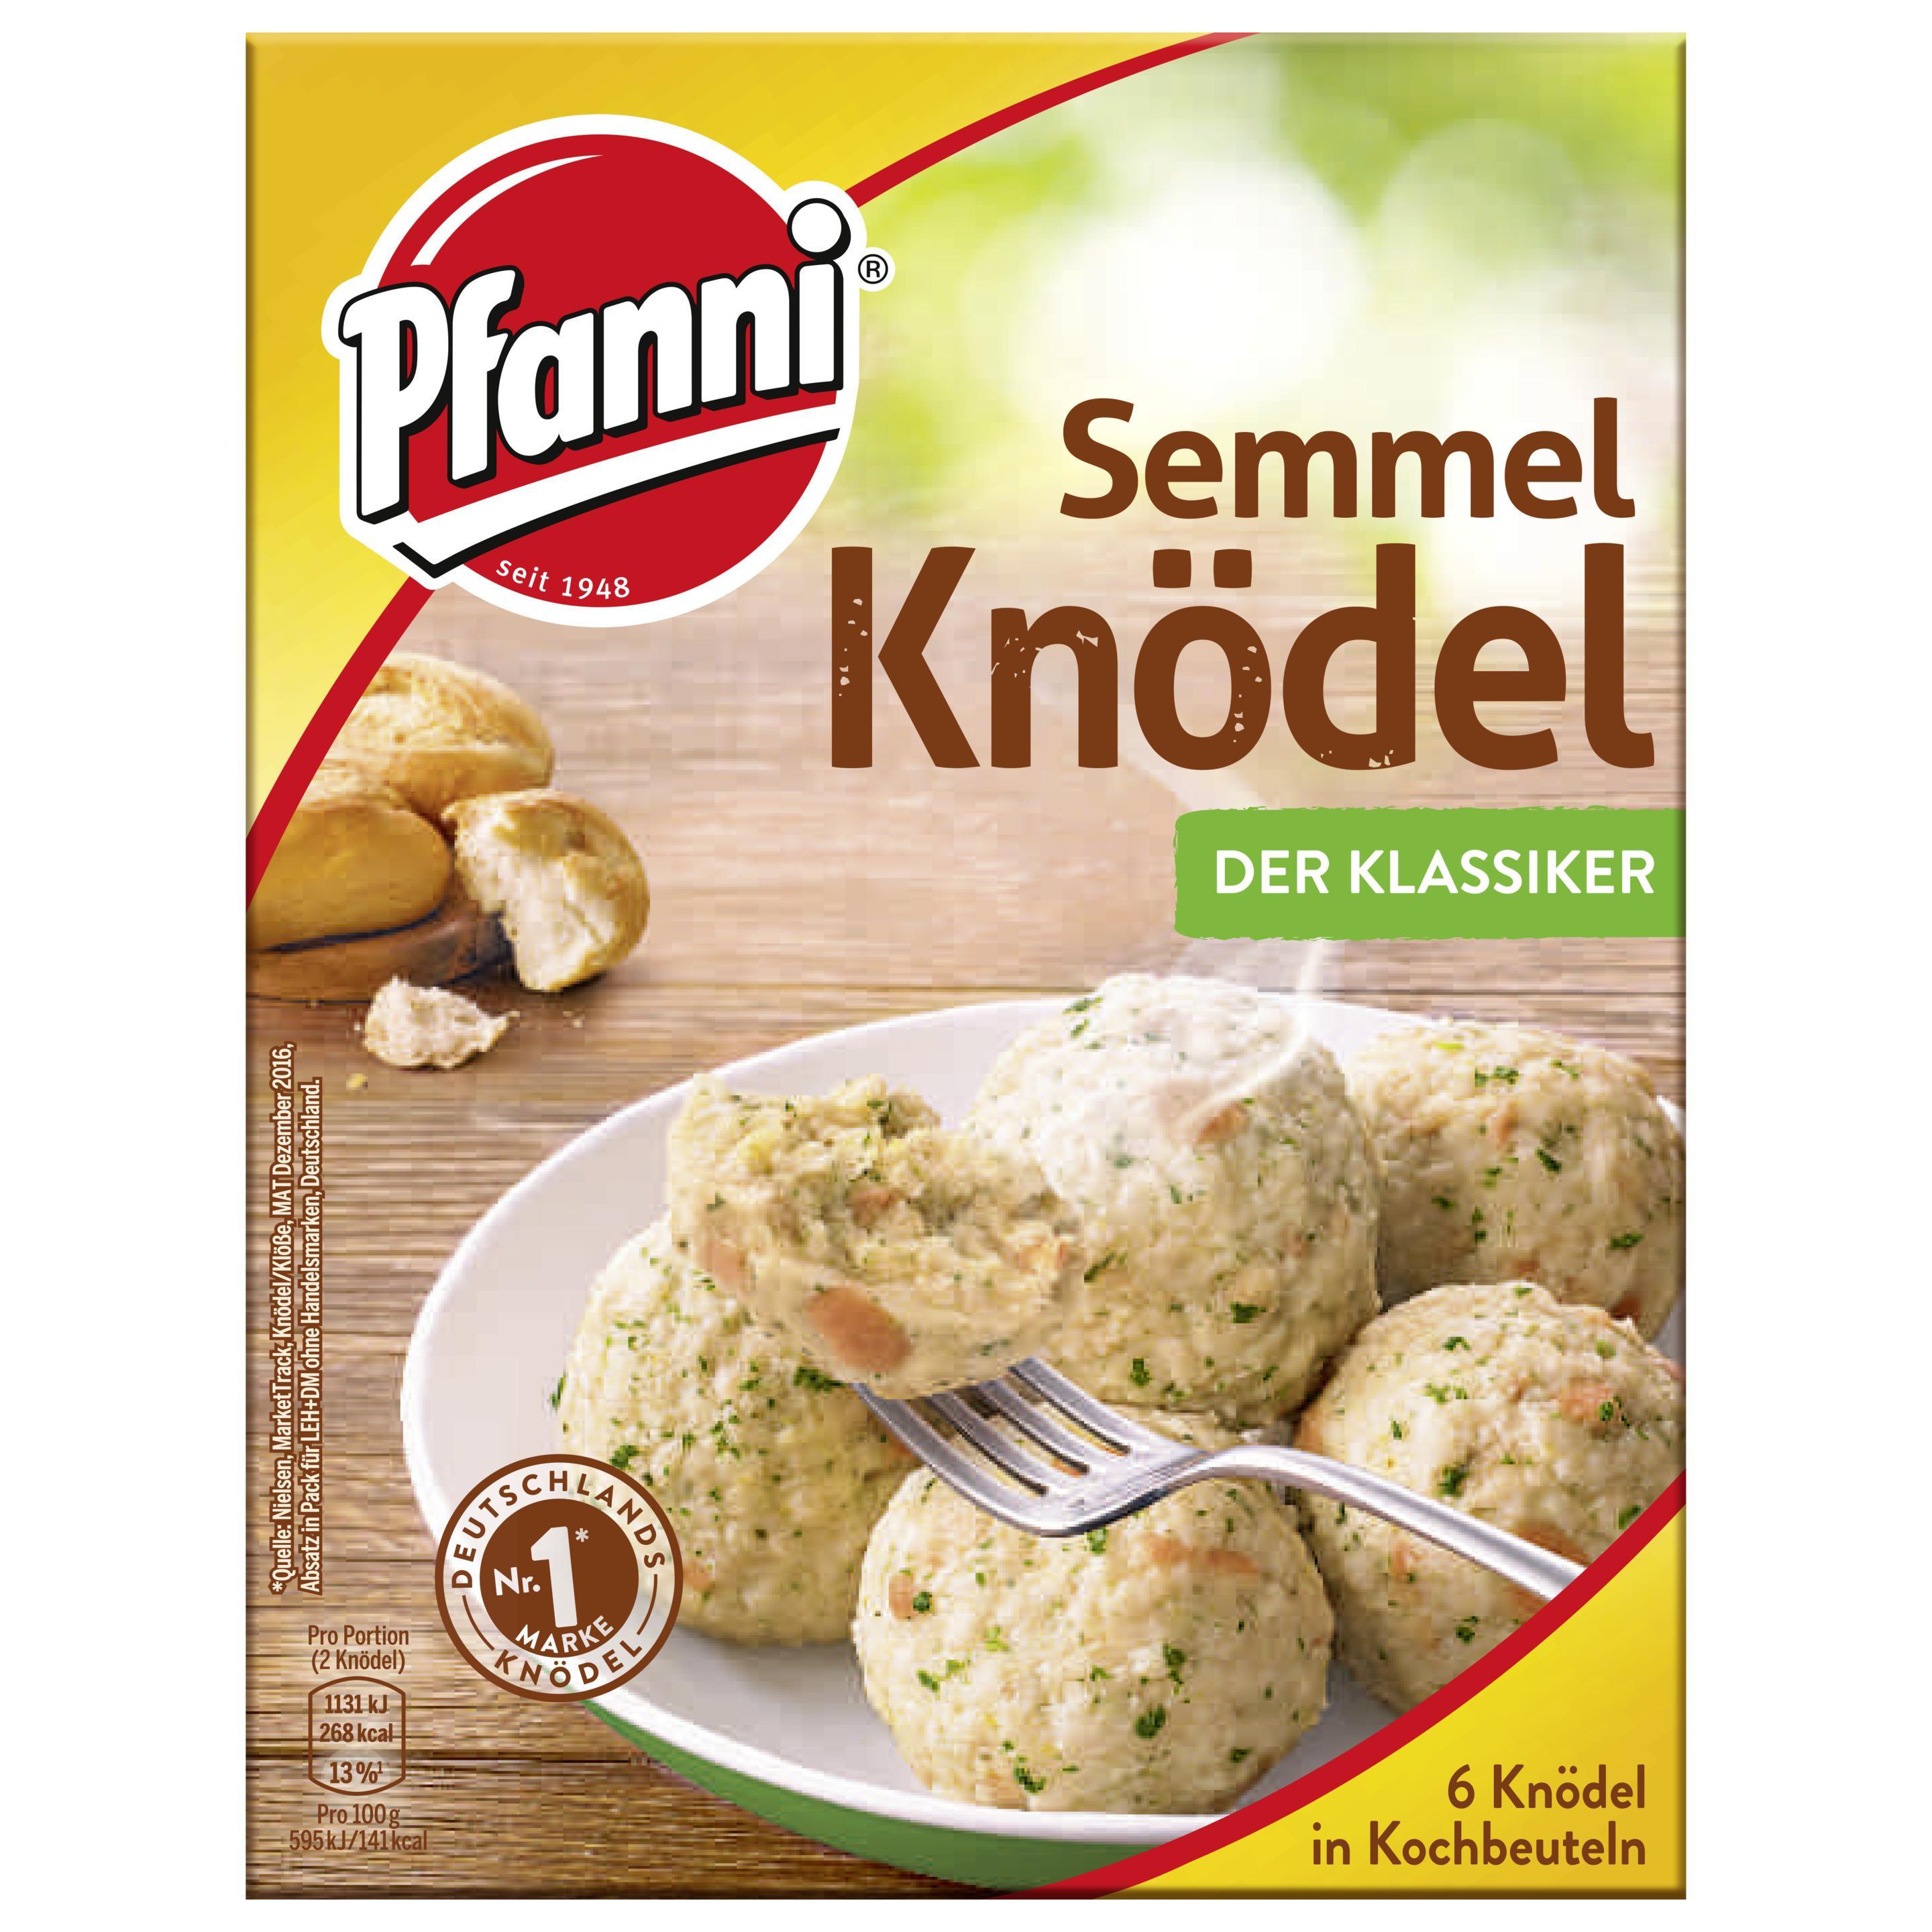 Pfanni Semmel Knödel im Kochbeutel Der Klassiker 6 Stück 200g Packung